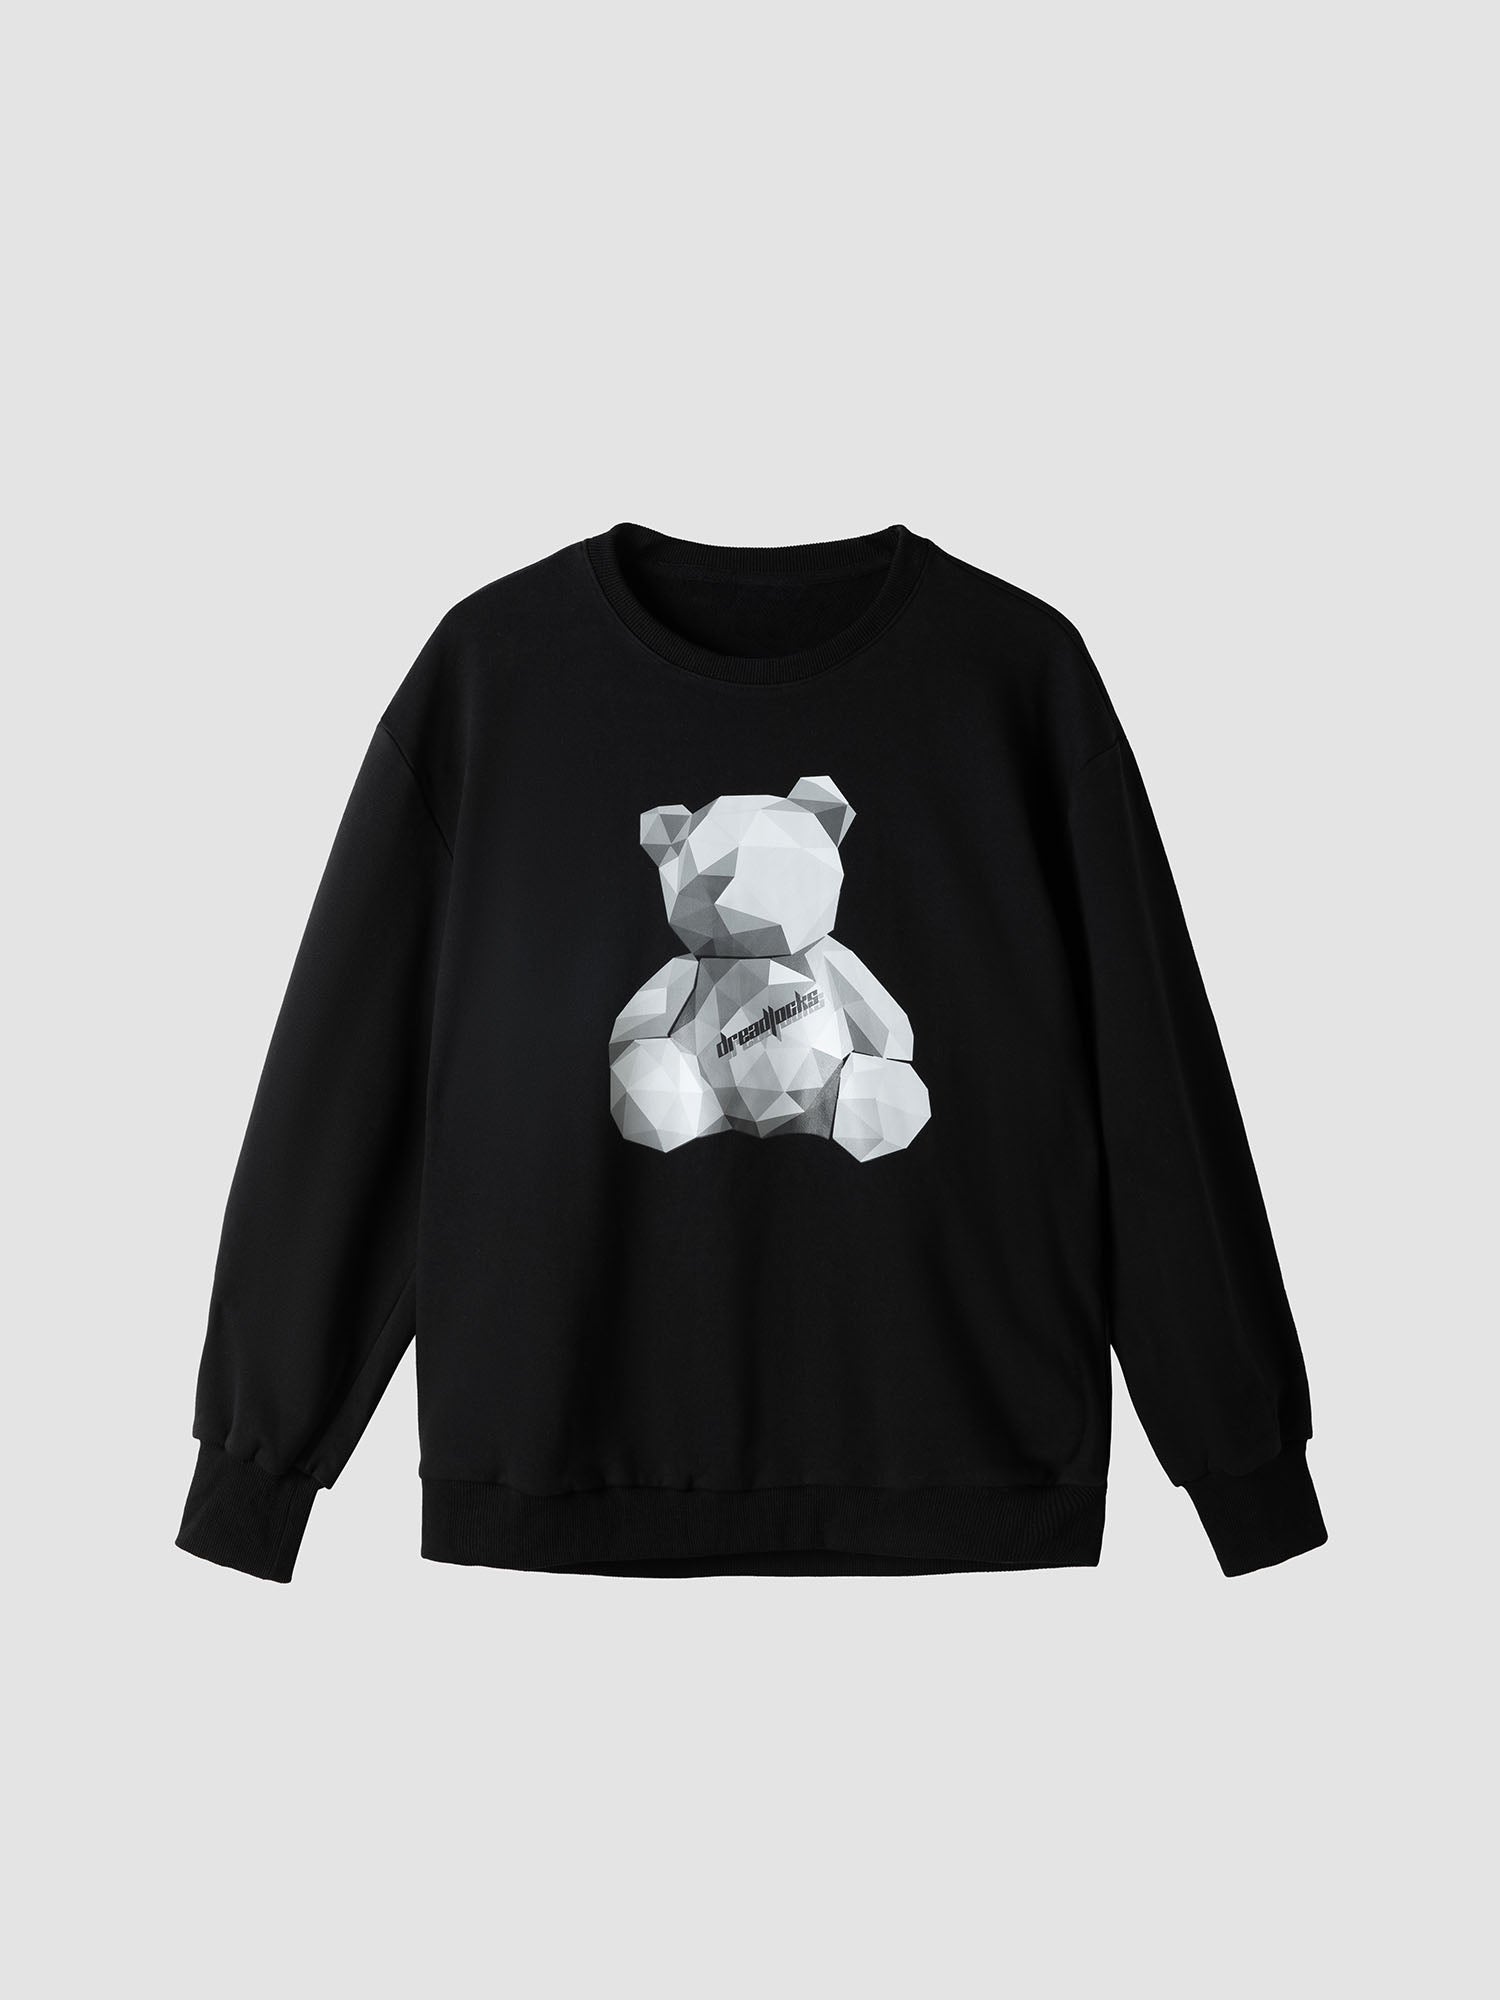 JUSTNOTAG Geometric Cartoon Bear Picture Sweatshirts